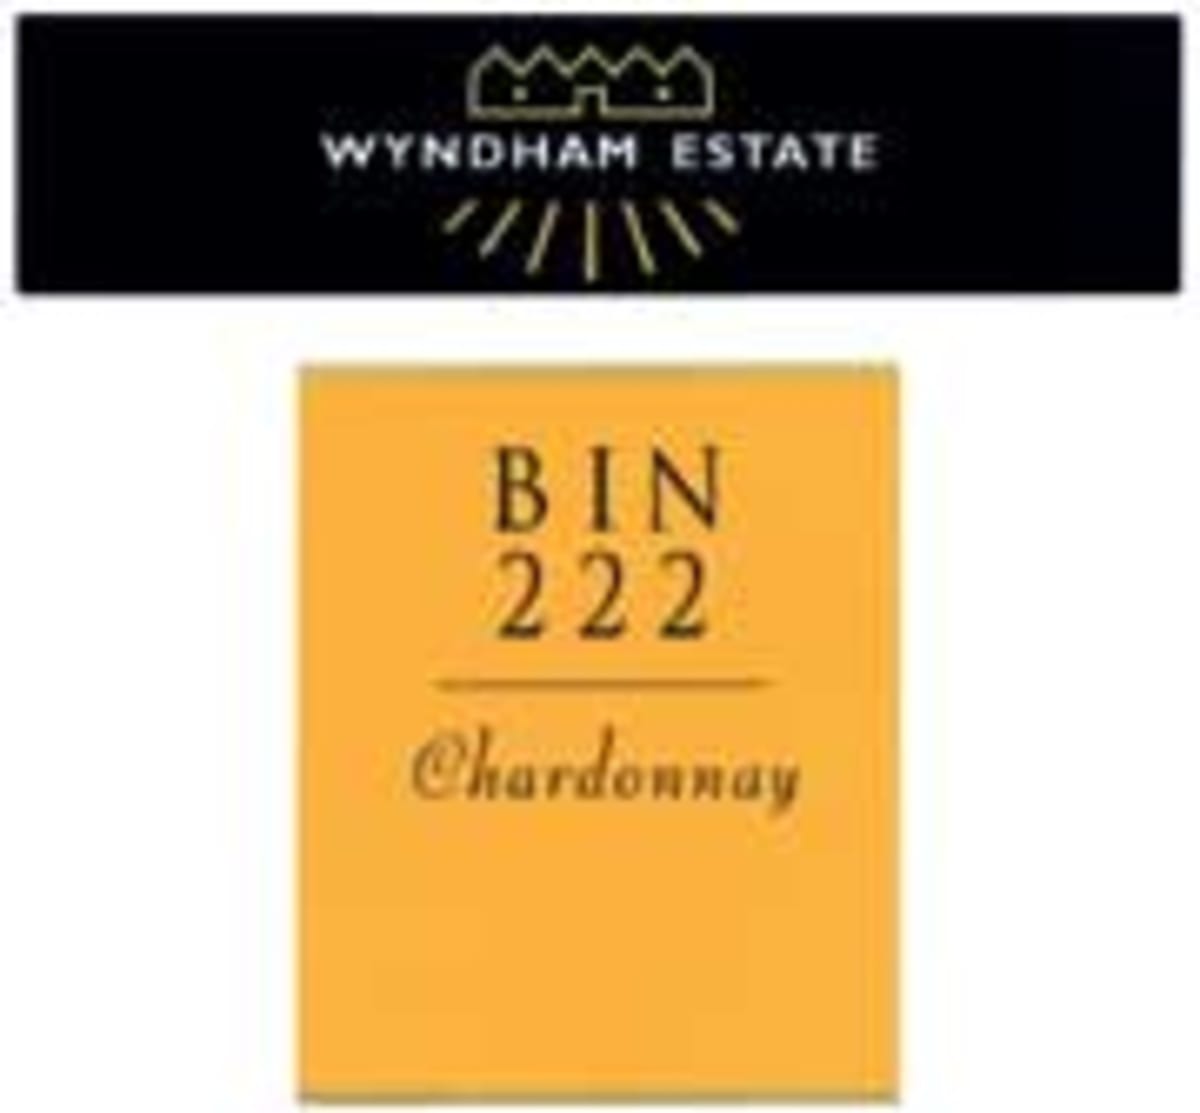 Wyndham Bin 222 Chardonnay 2002 Front Label